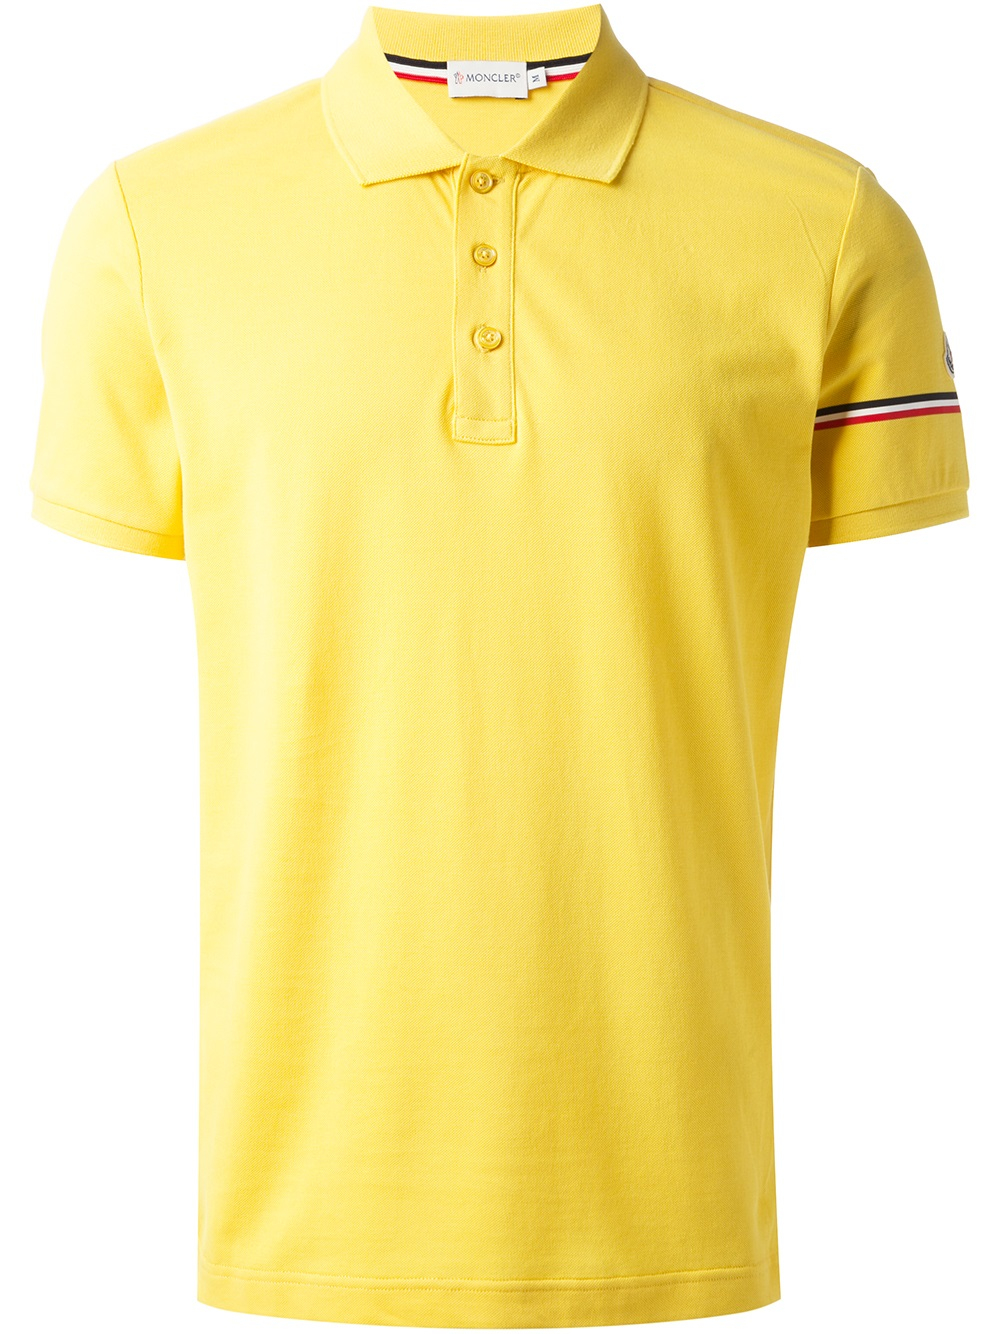 Moncler Short Sleeve Polo Shirt in 